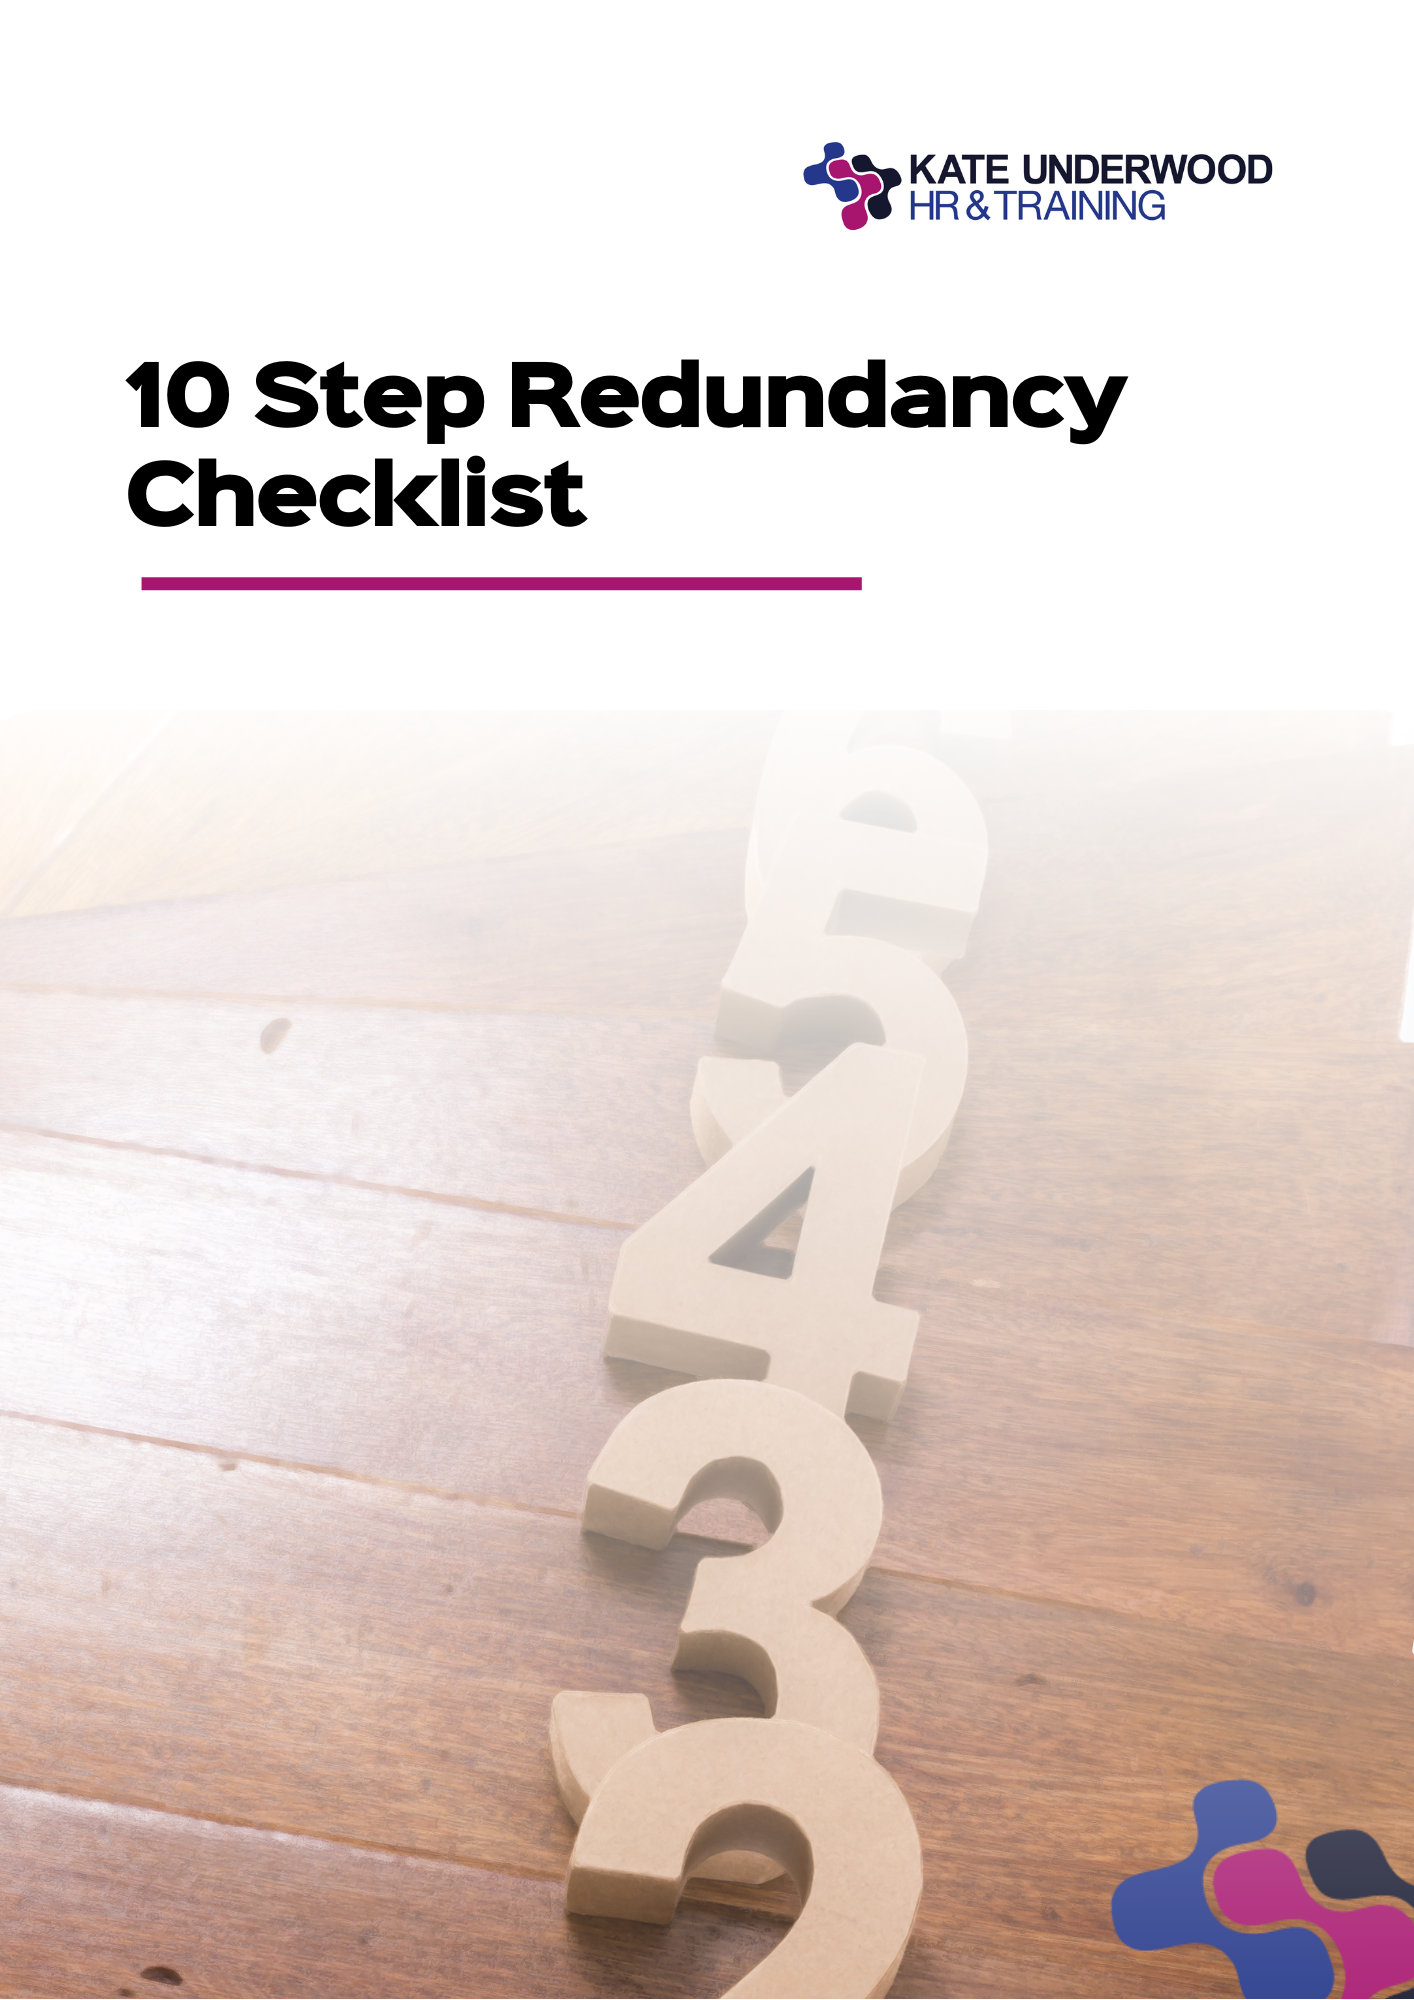 10 Step Redundancy Checklist